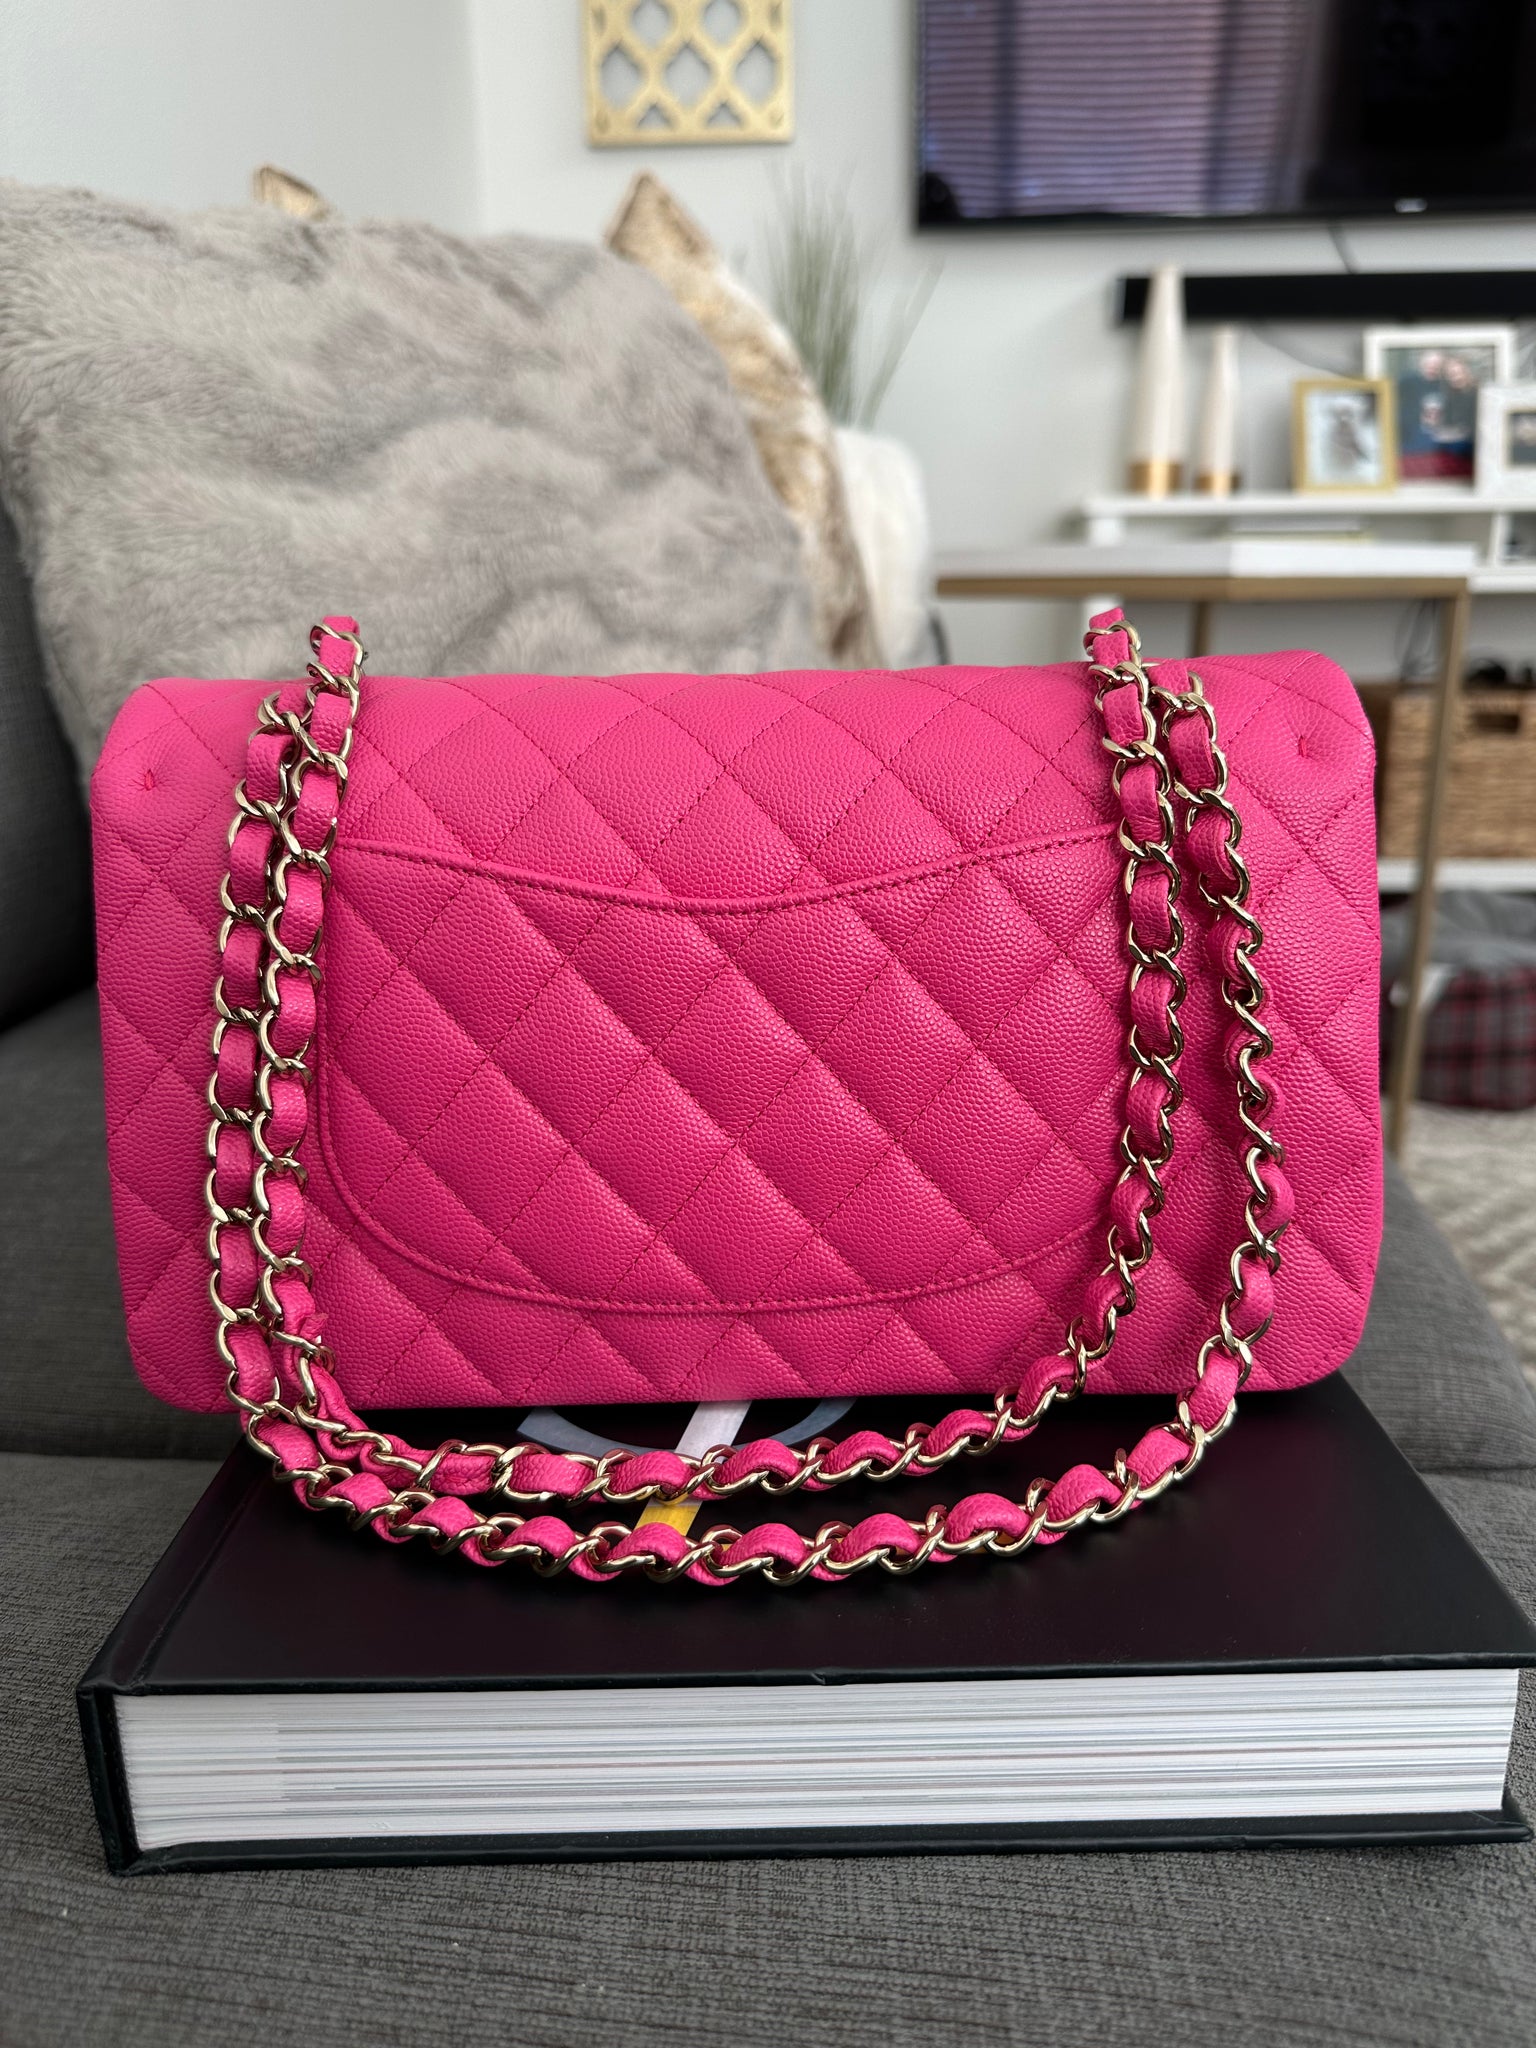 vintage pink chanel handbag